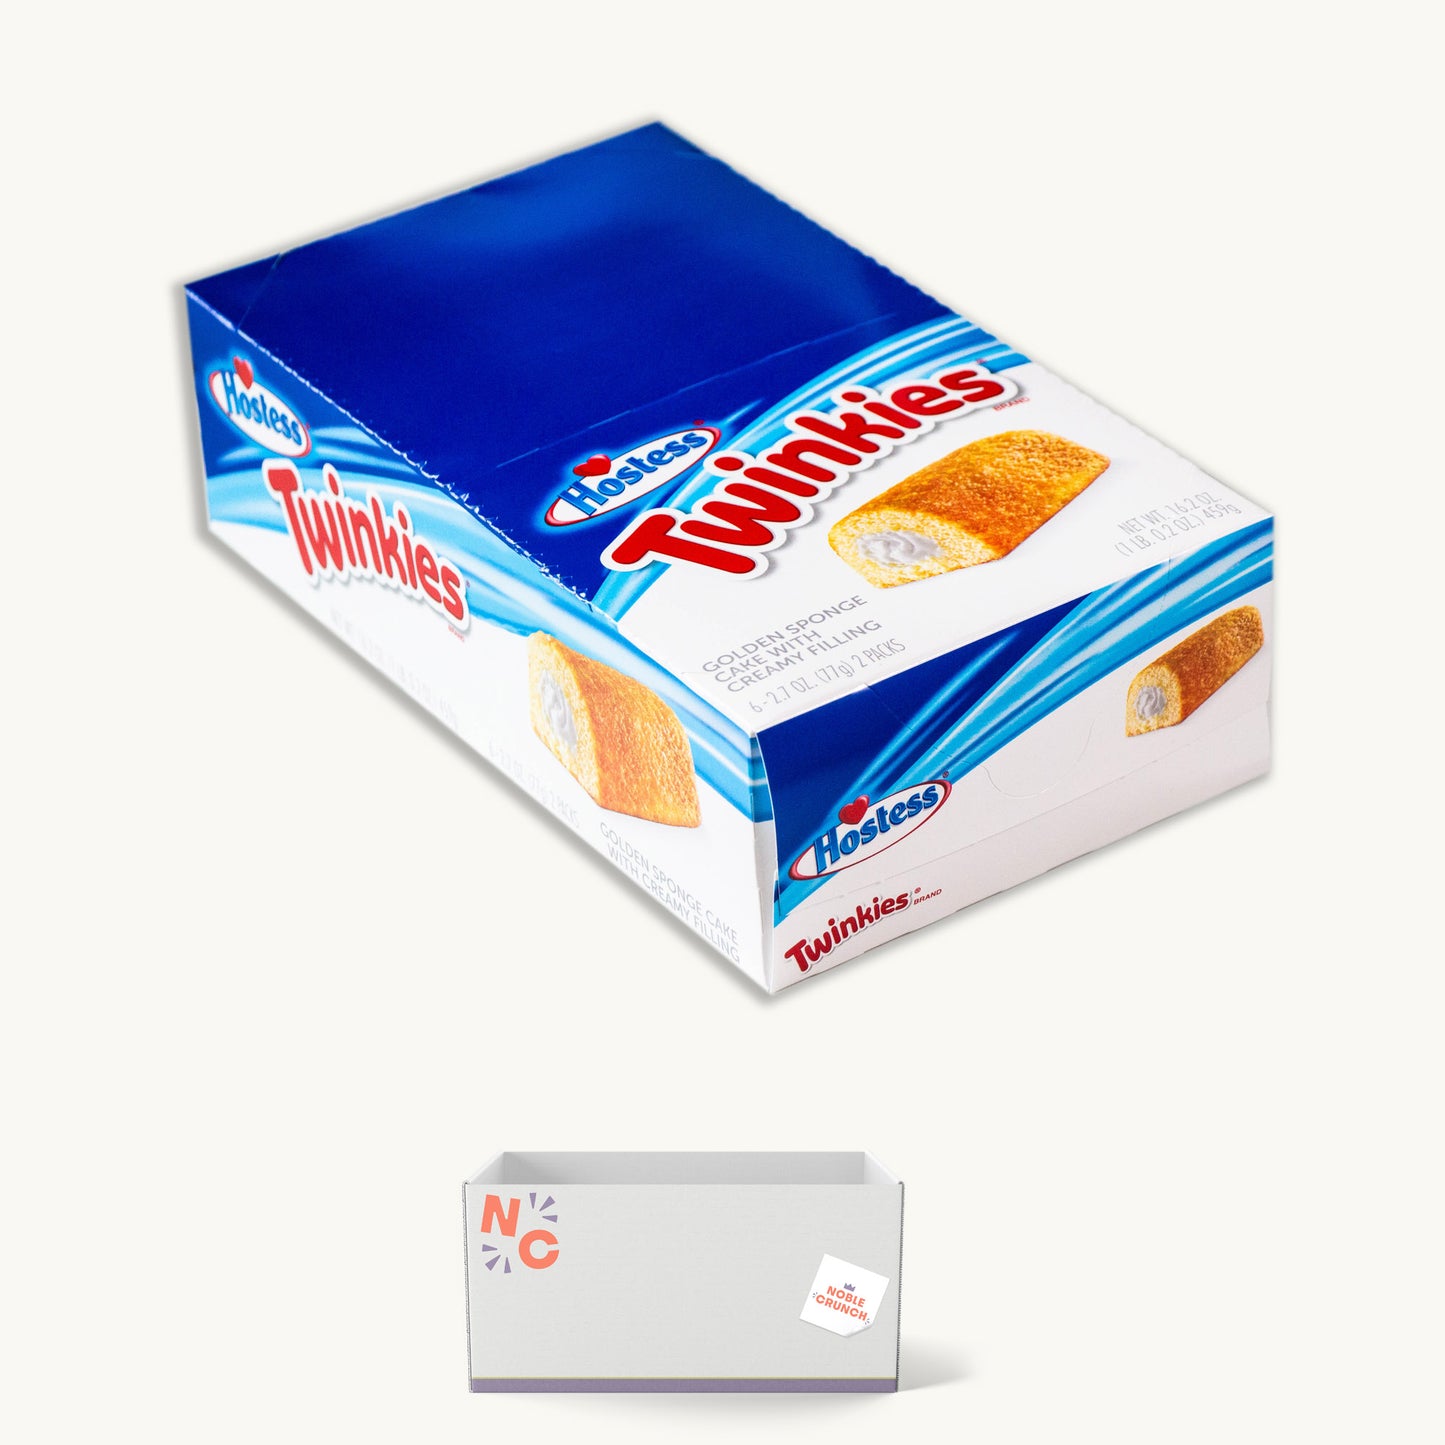 Hostess Twinkies Single Serve 18ct - Coconut Macaroons 2ct